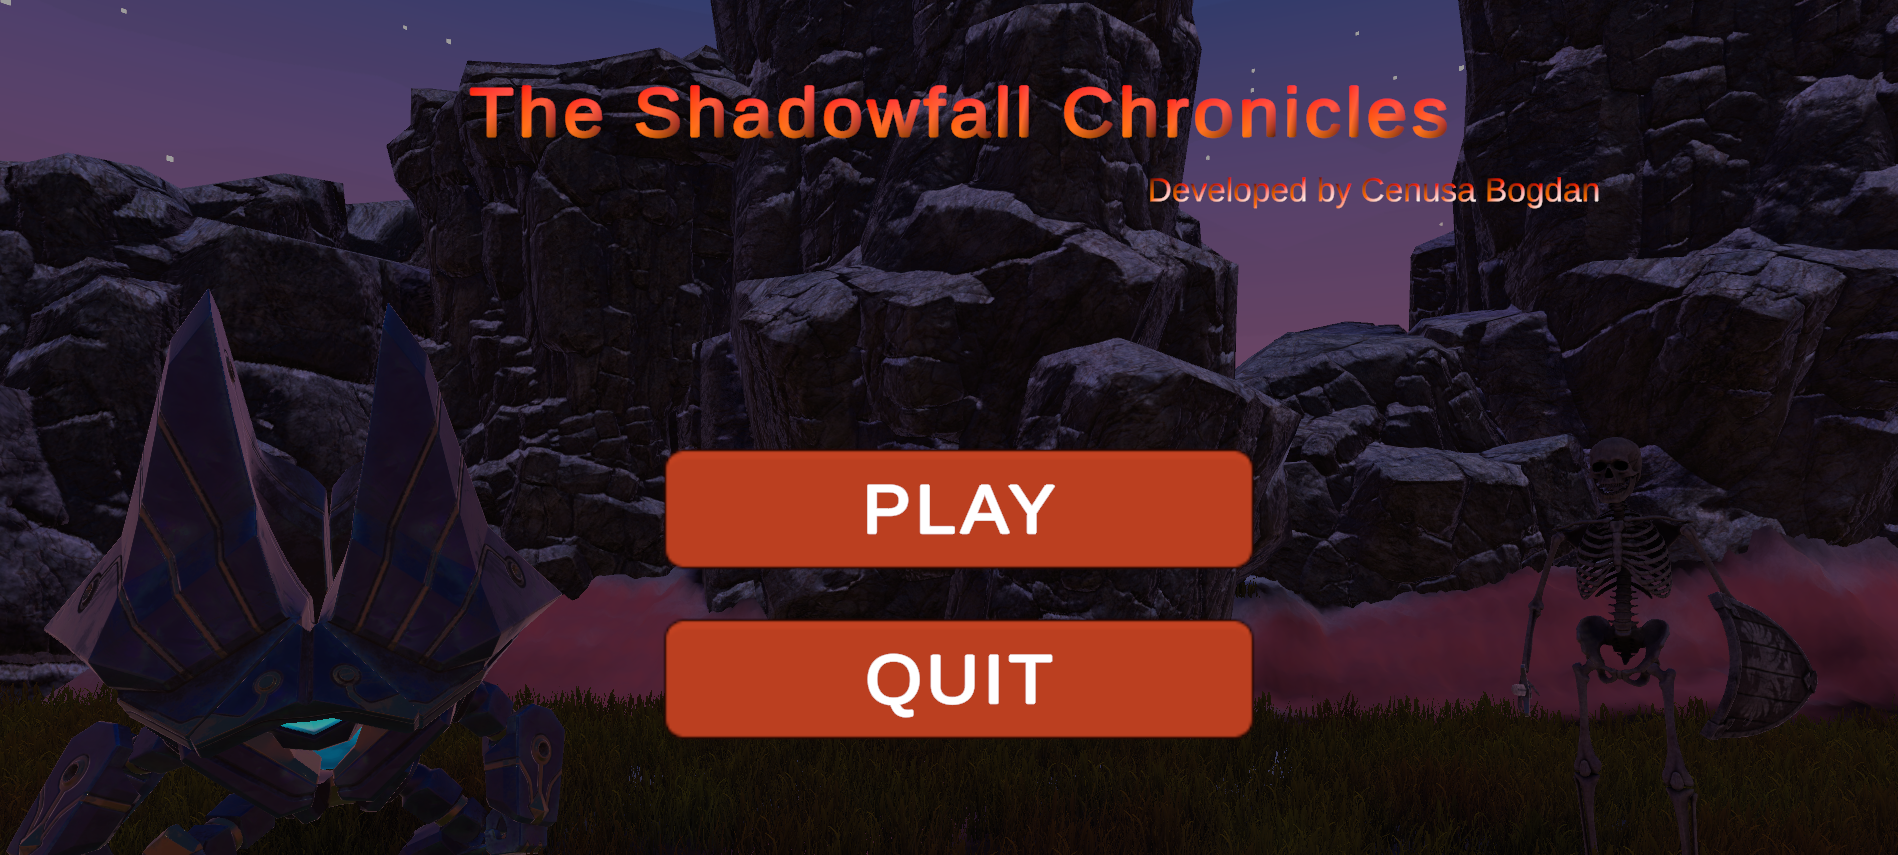 The Shadowfall Chronicles